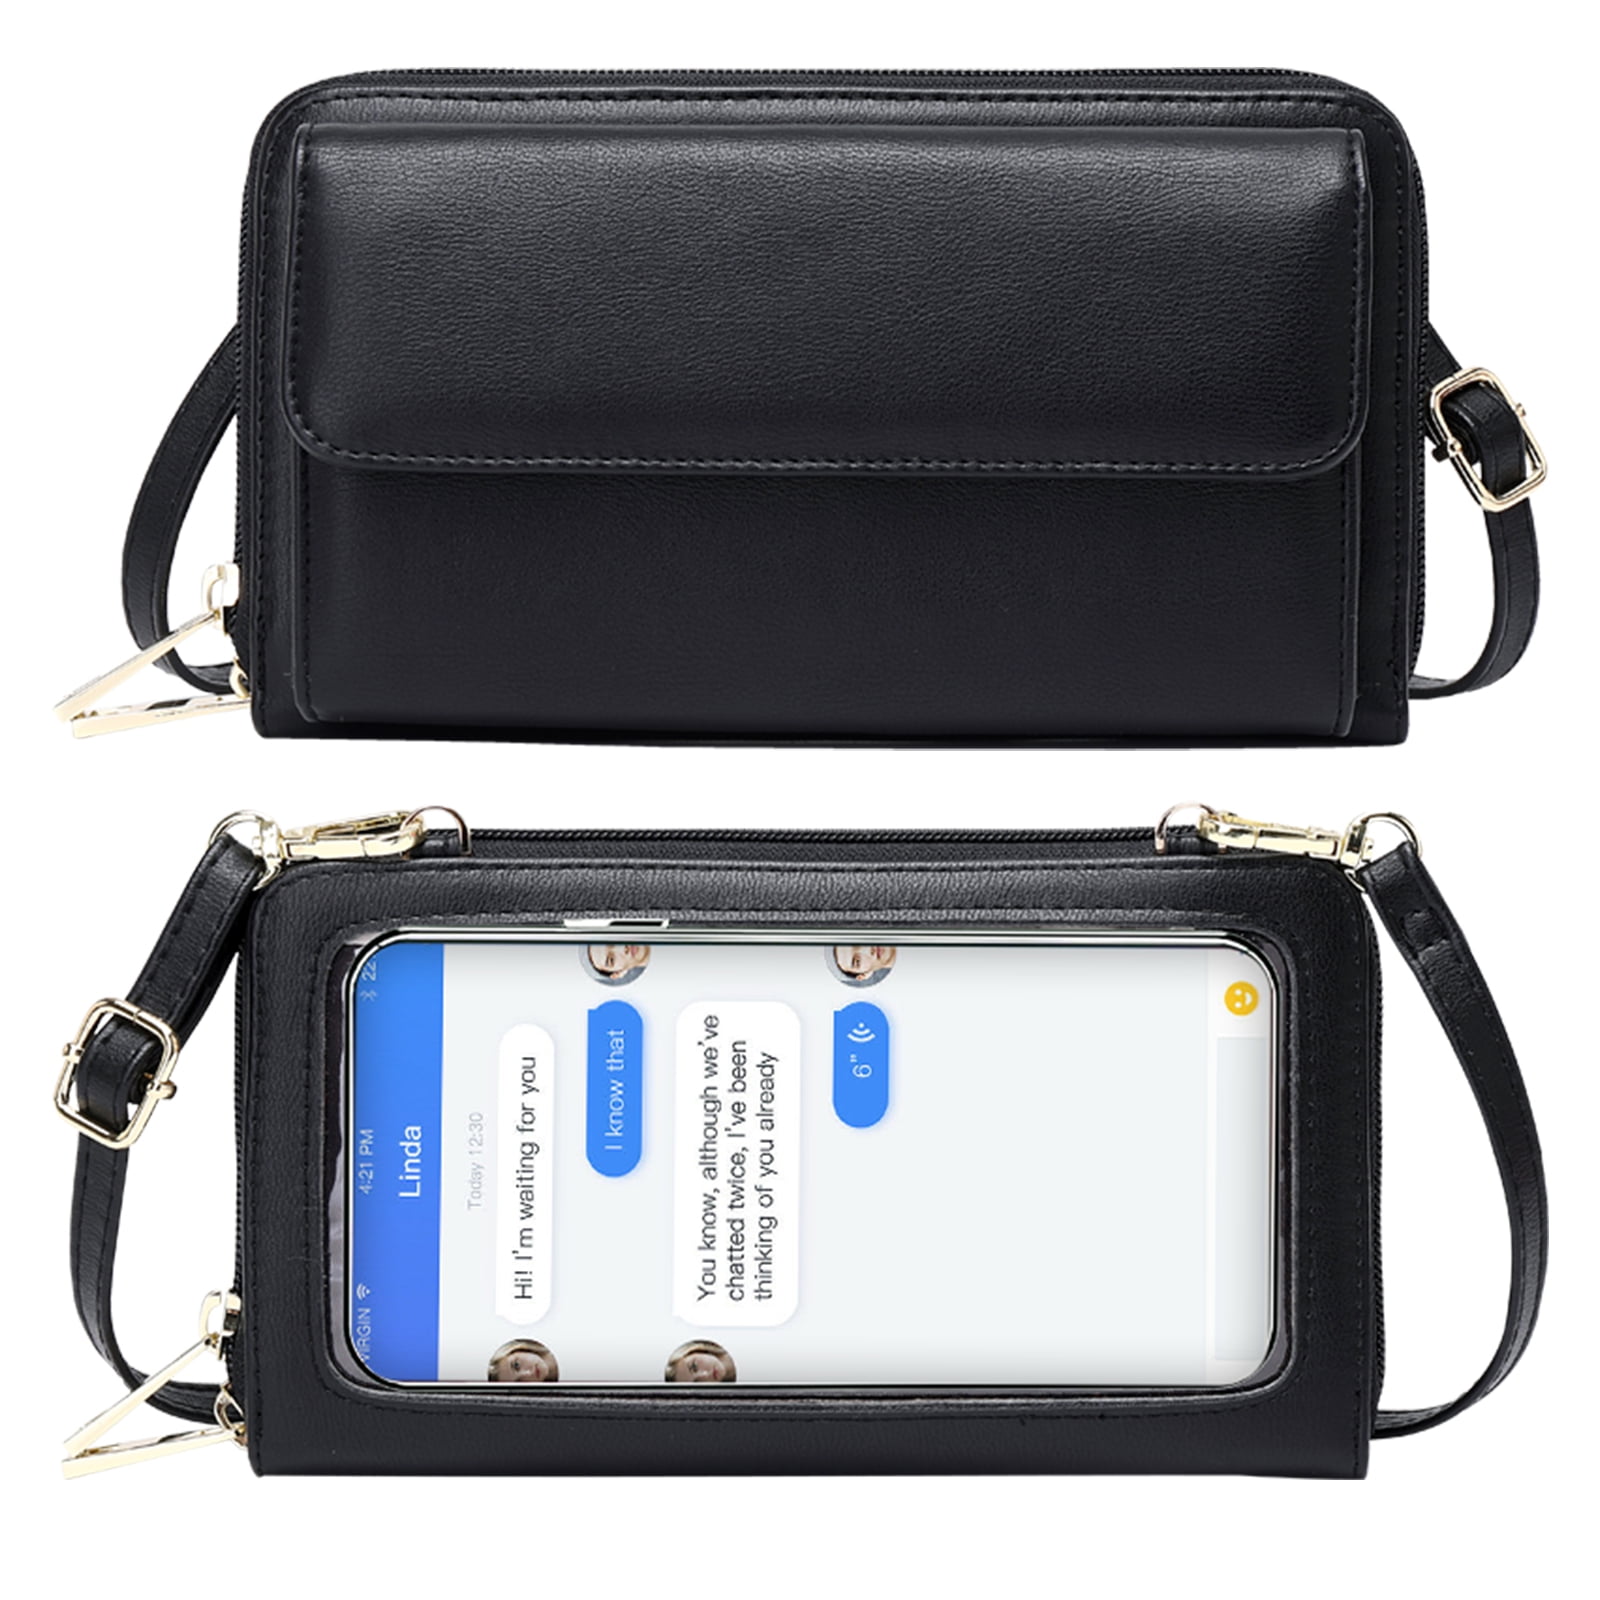 Cell Phone Case iPhone Bag Smartphone Bag Bags & Purses Handbags Wristlets Mobile Phone Wristlet Messages Multi-Purpose Pouch 